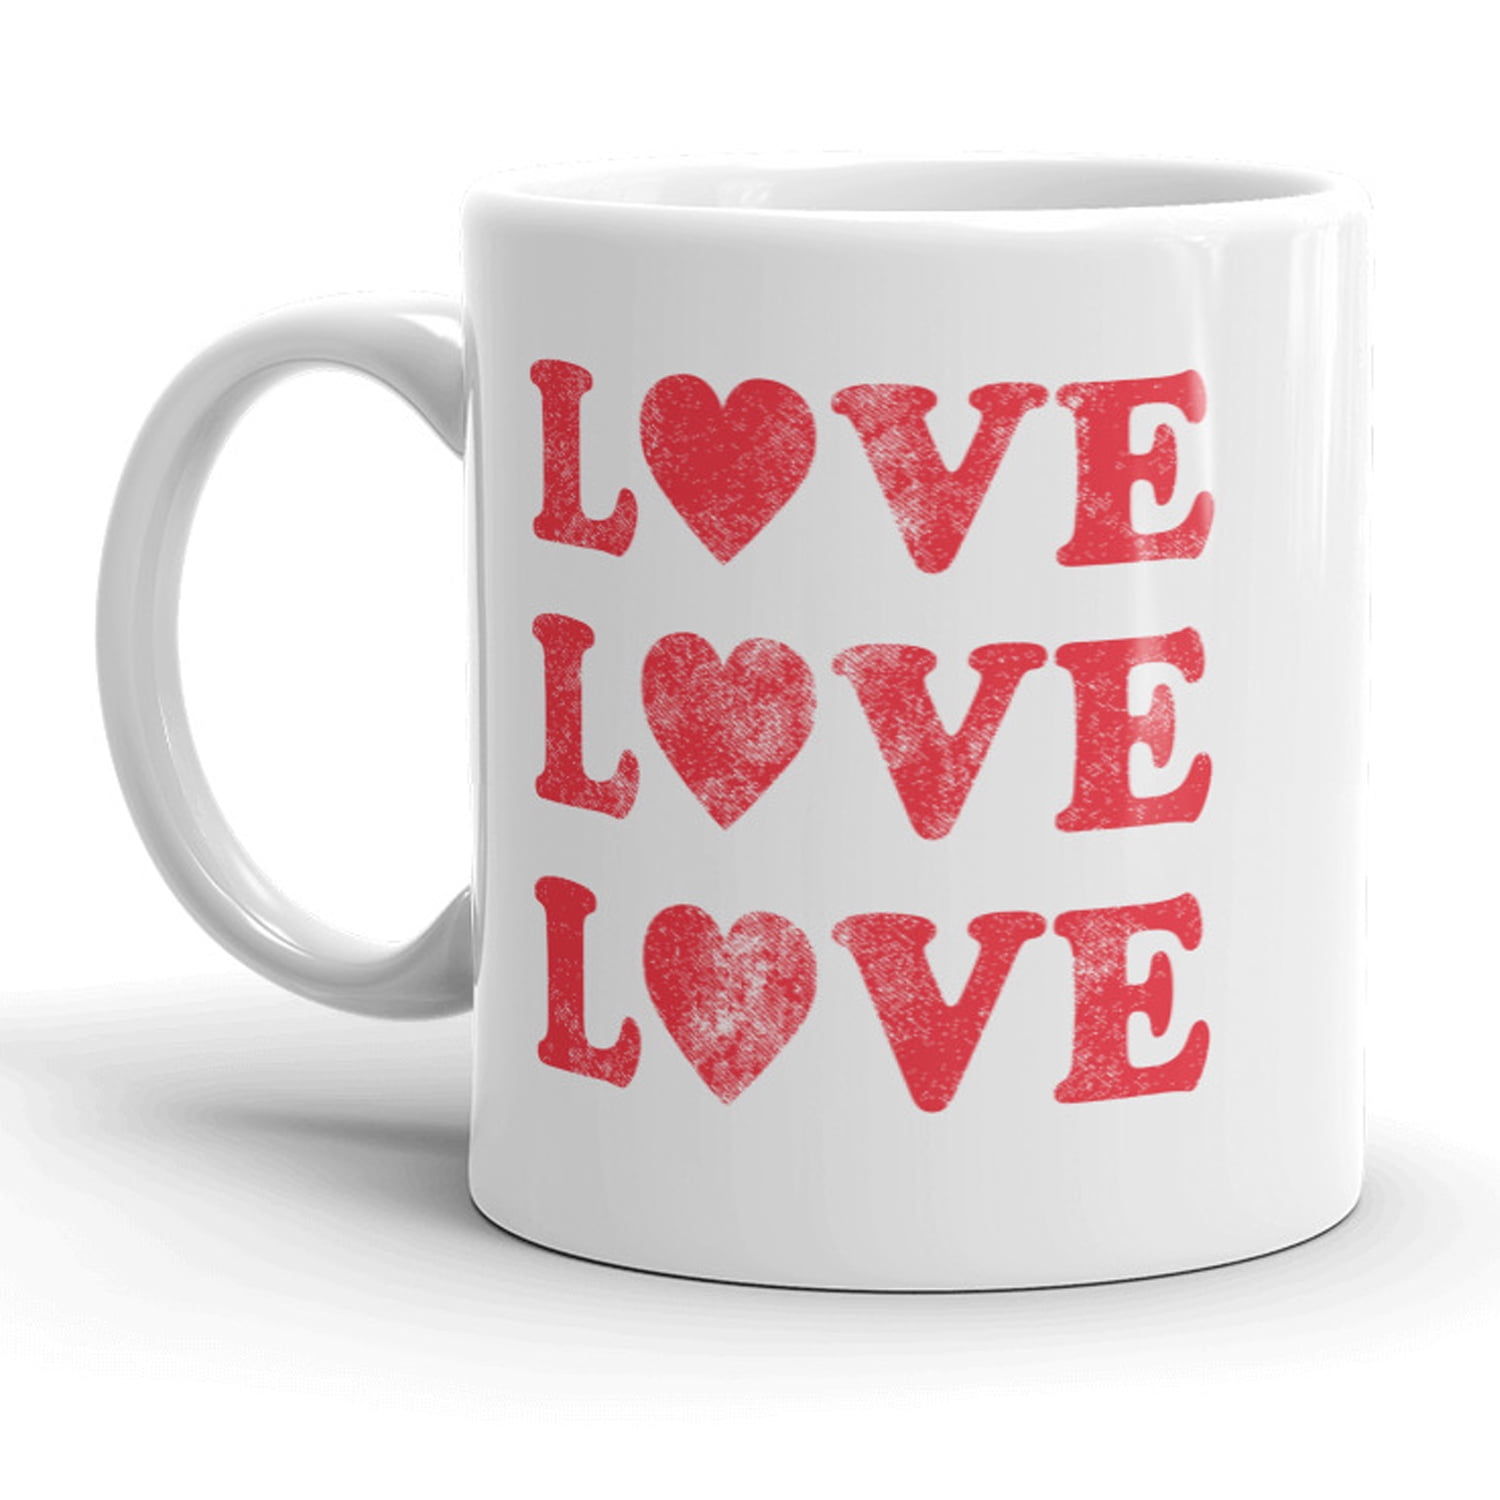 Cute Mugs Colorful Heart Shaped Ceramic Coffee Mug Cups, 11oz